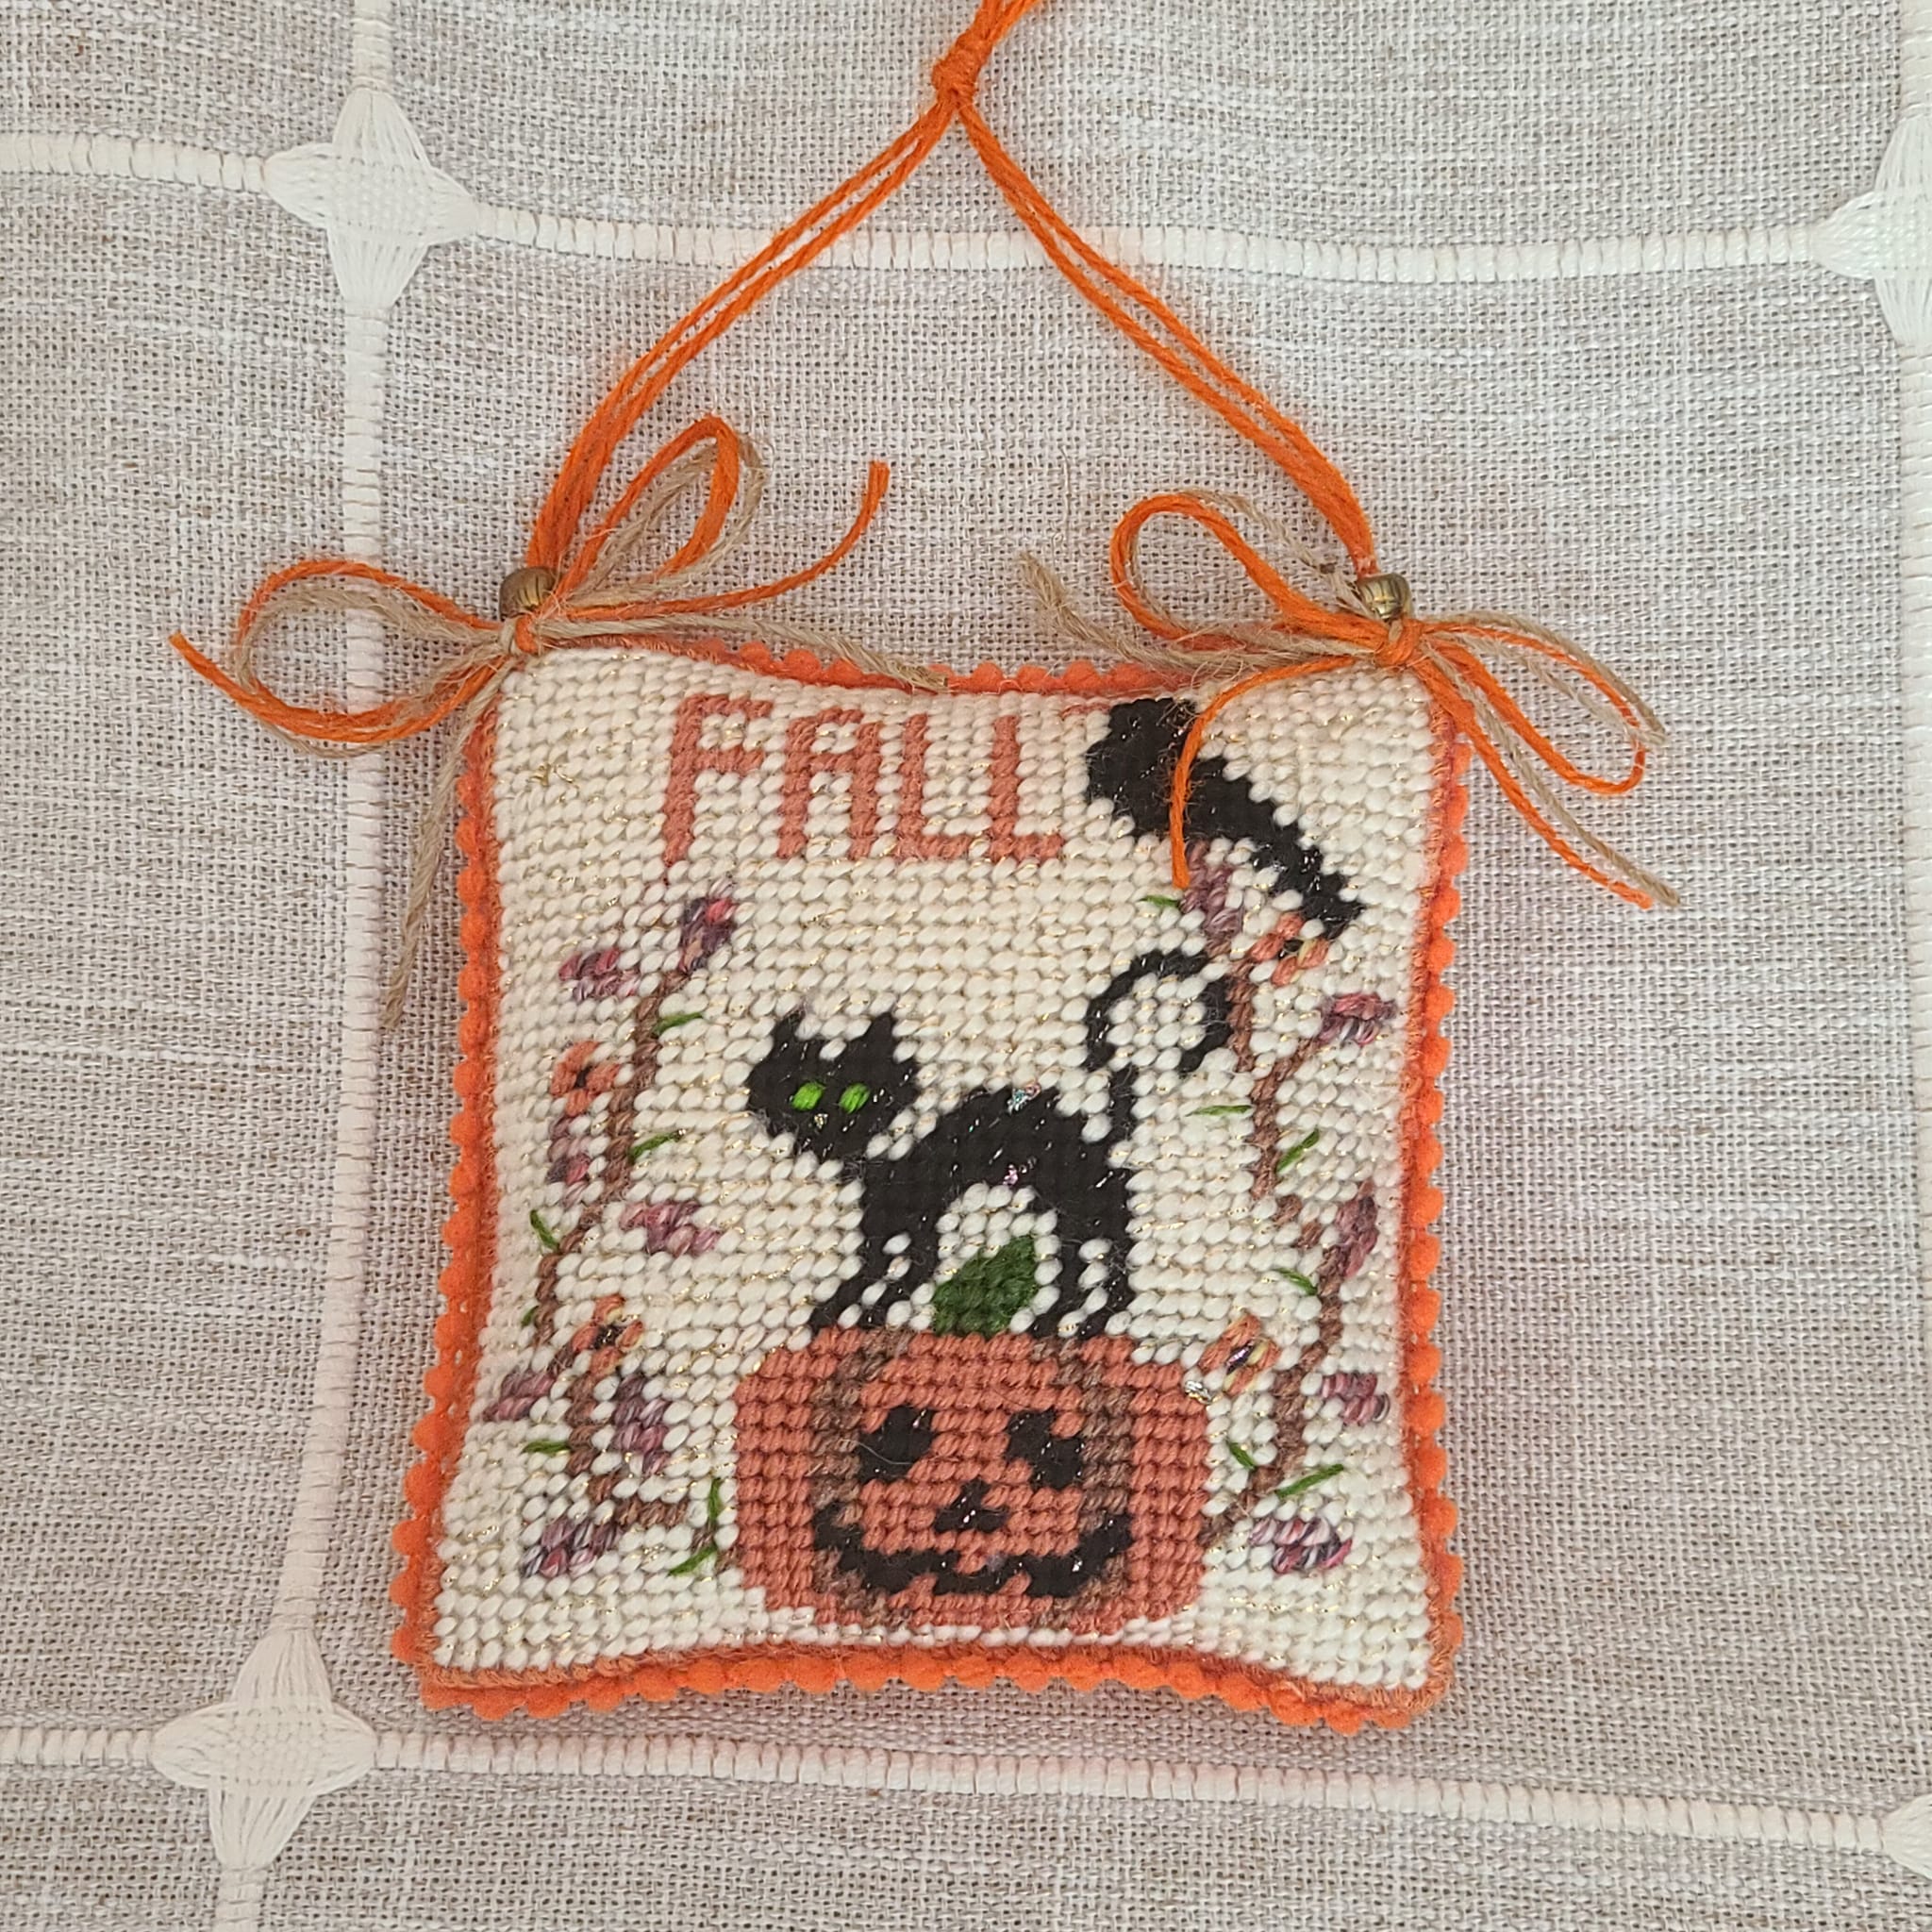 Hallowen finished needlepoint FALL pumpkin & black cat ornament - Click Image to Close